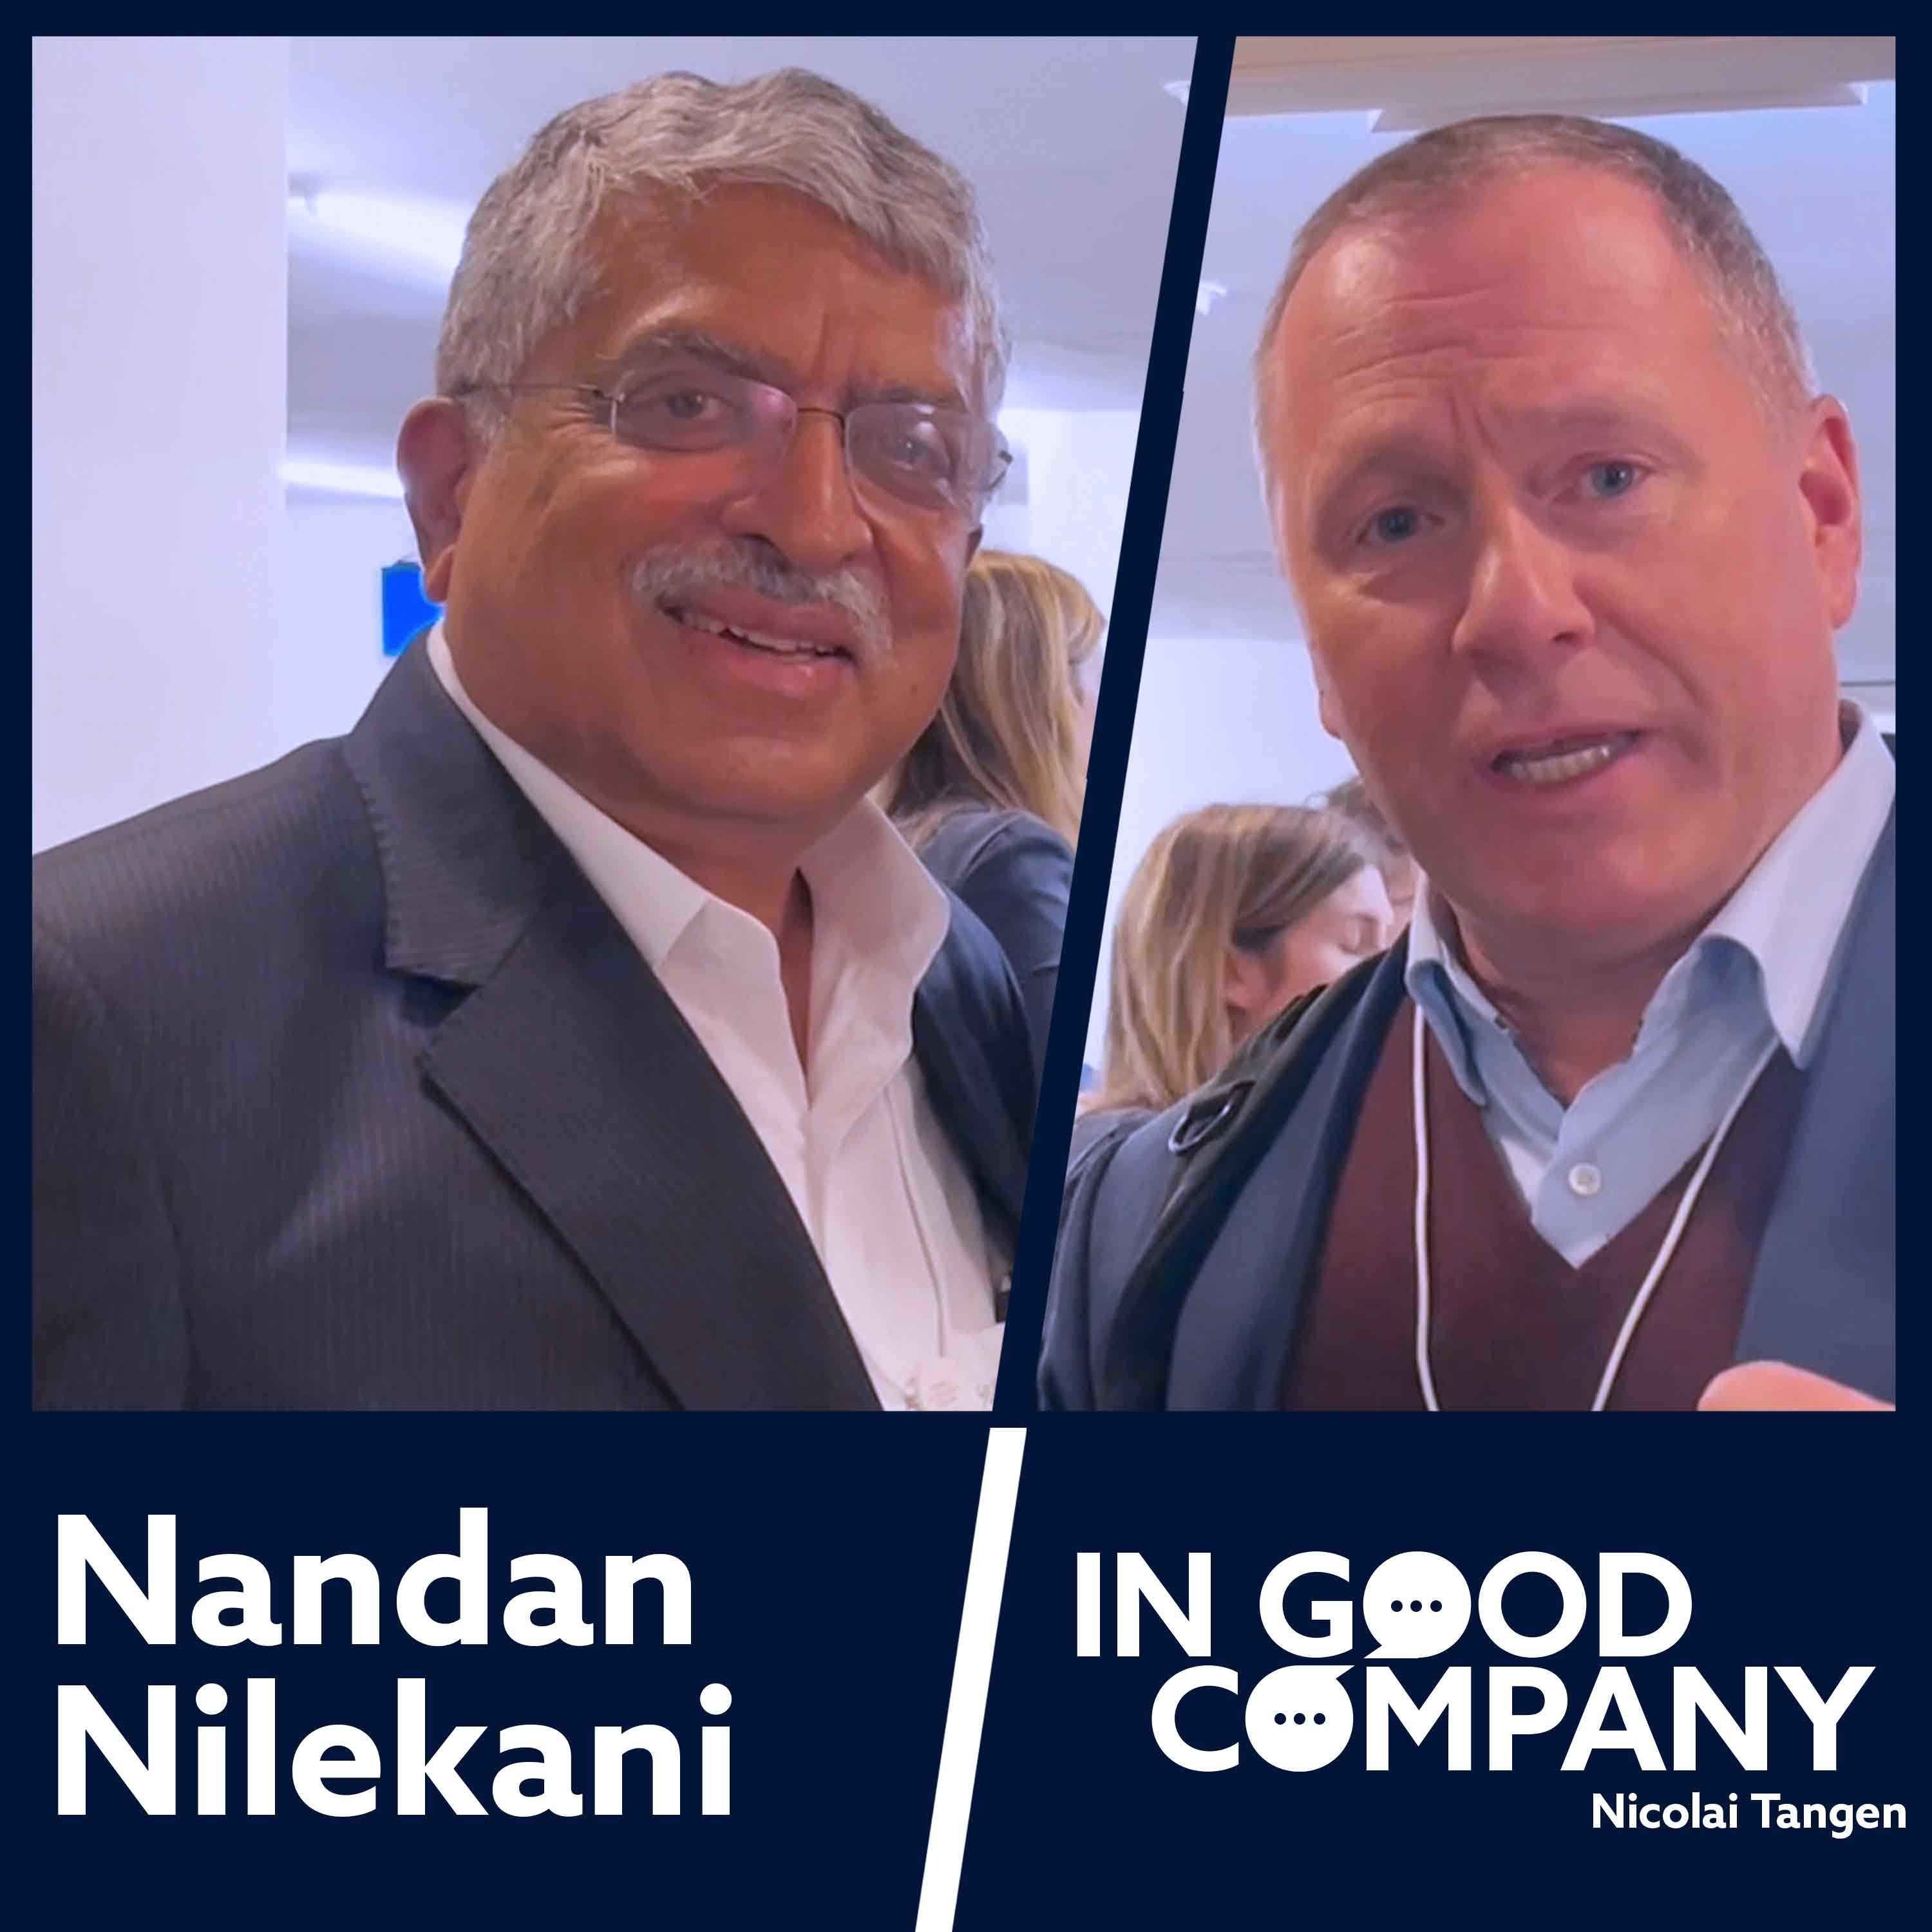  Nandan Nilekani Co-founder and Chairman of Infosys